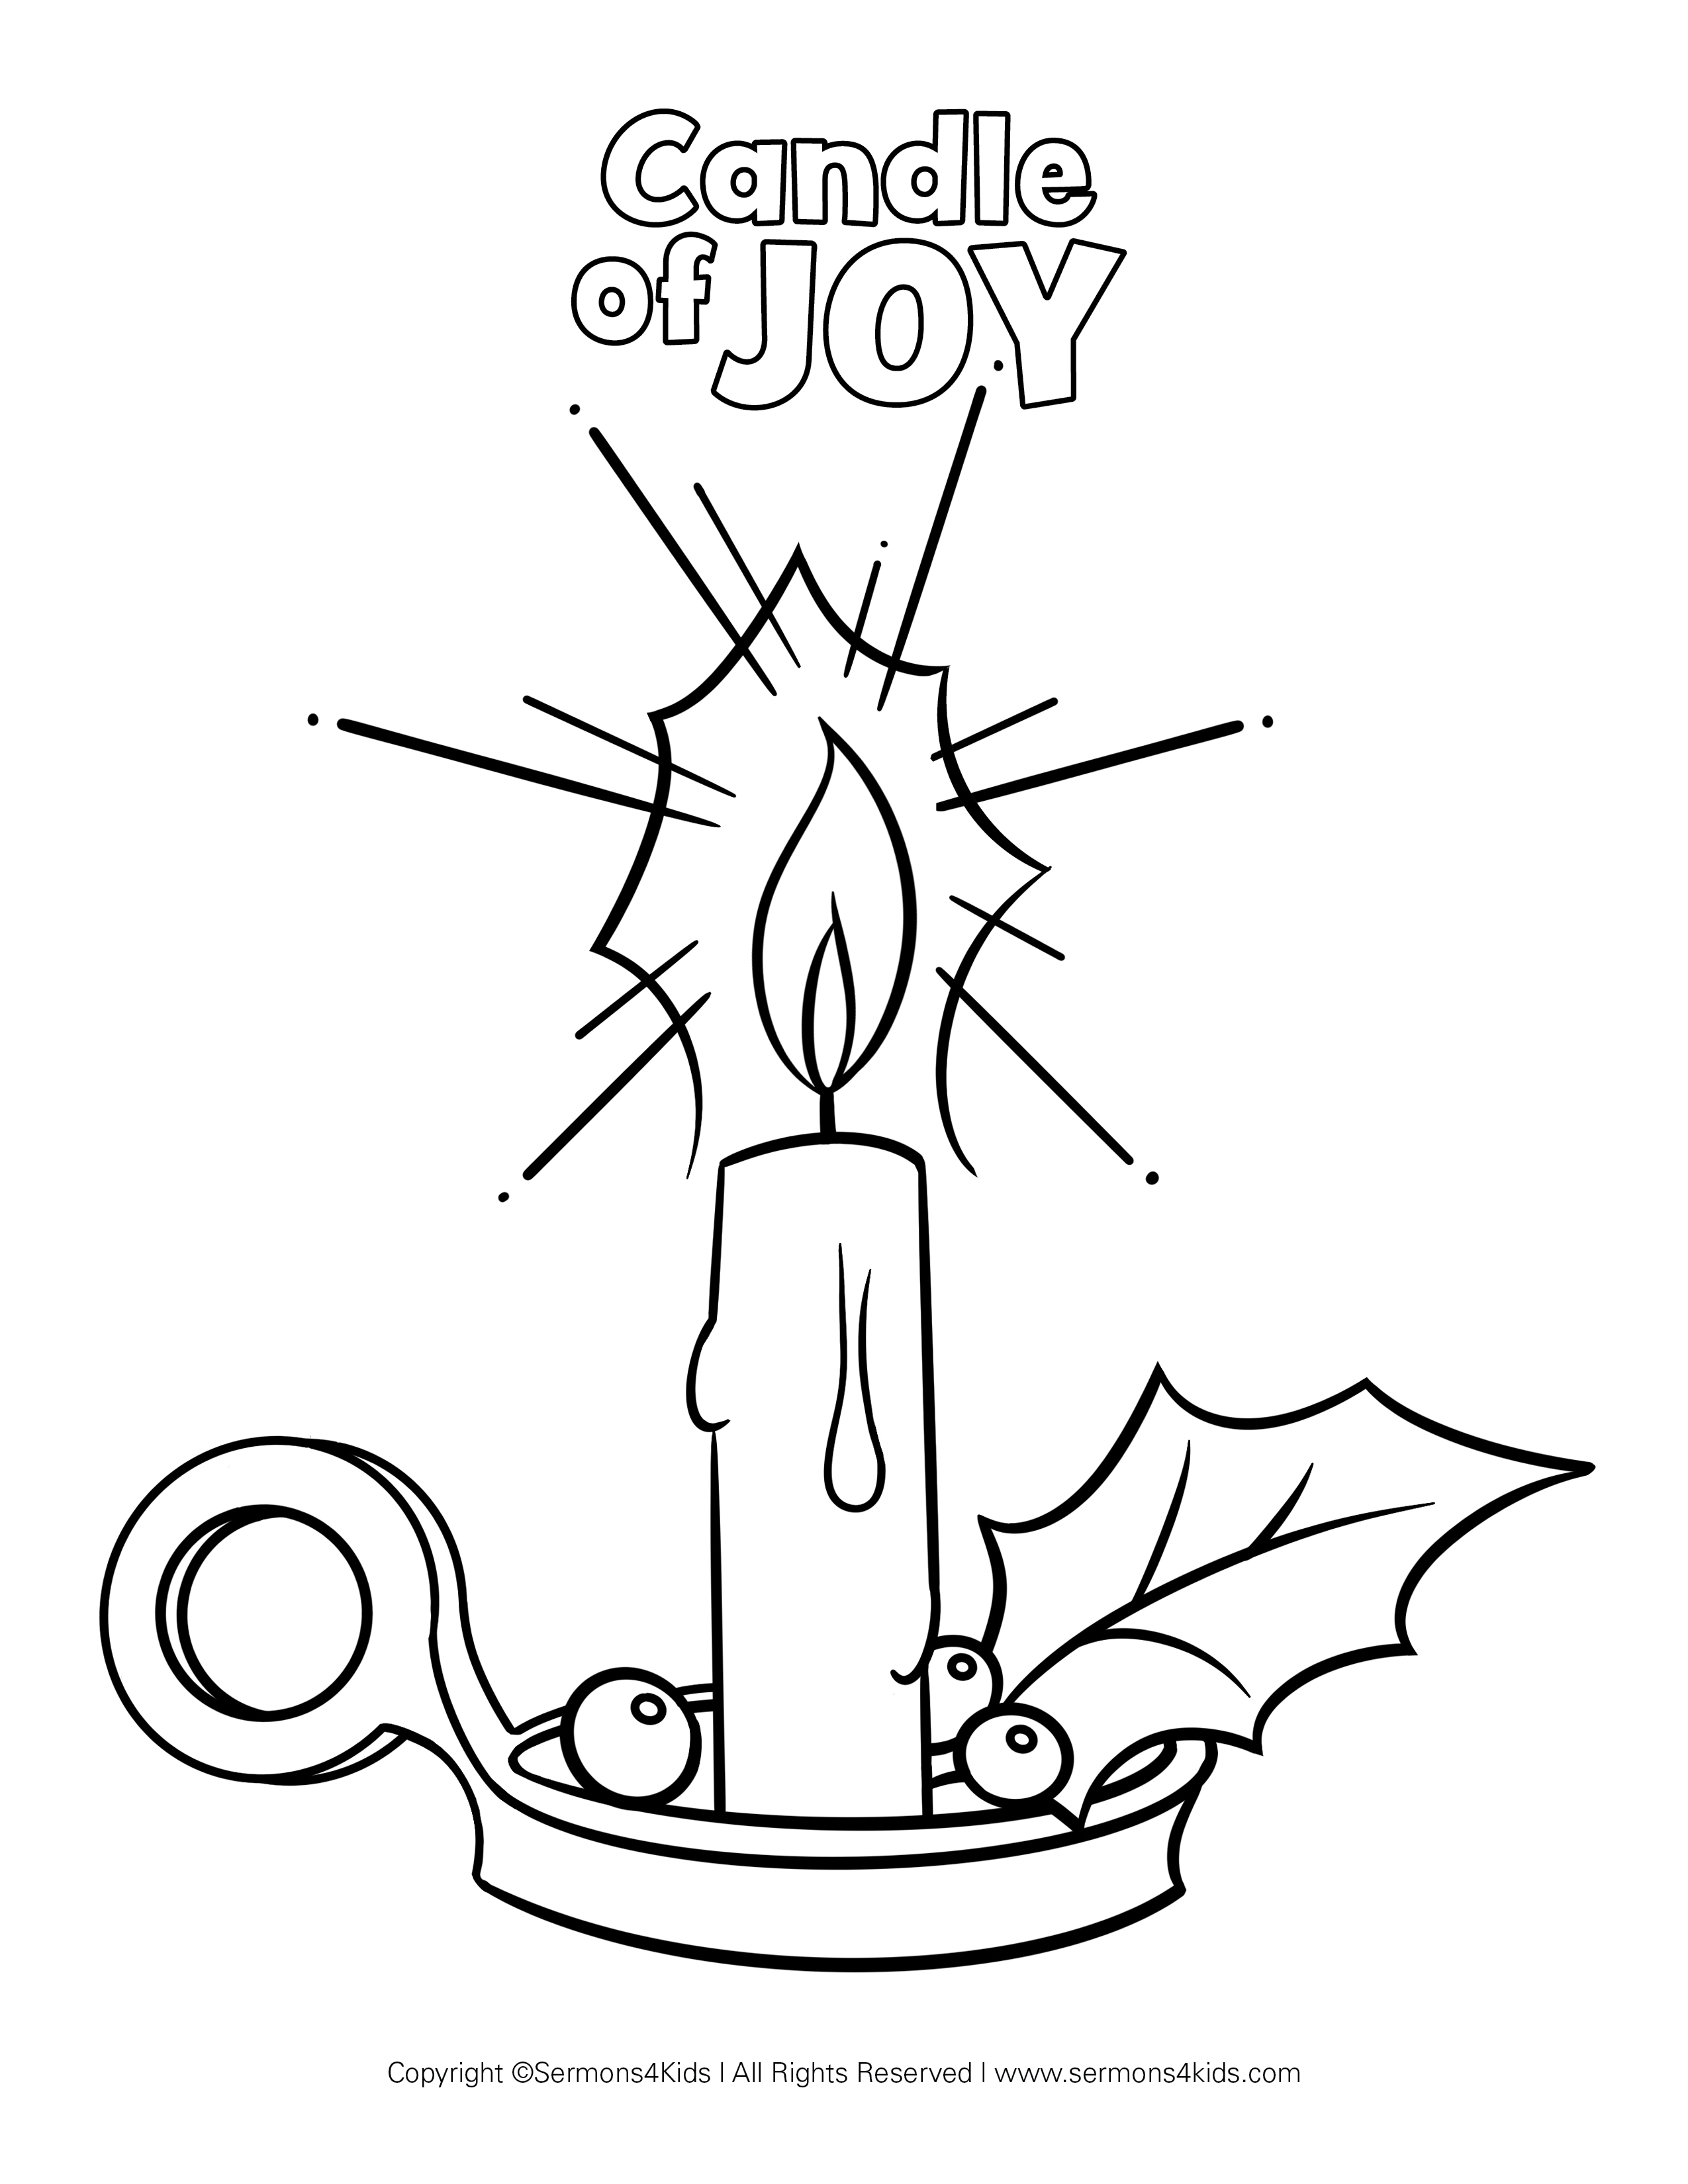 Candle-of-Joy